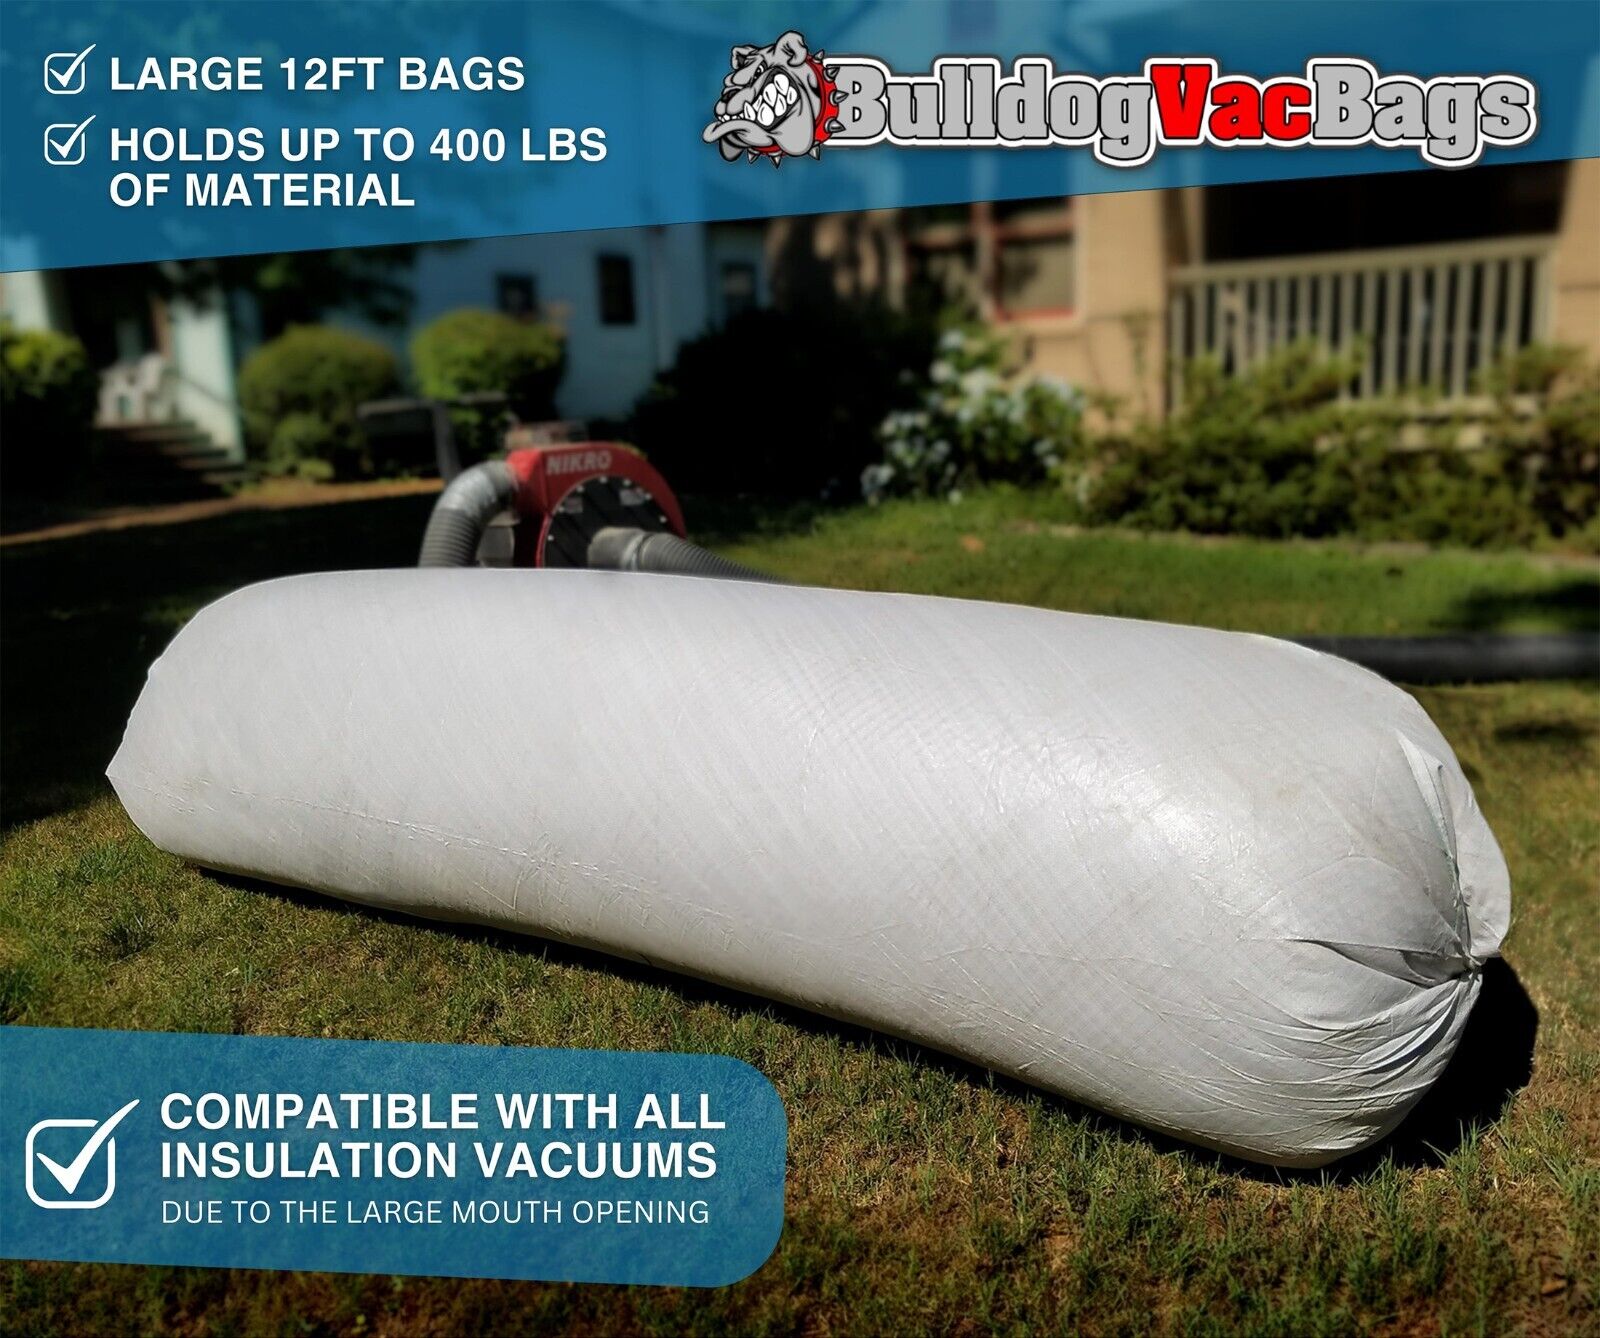 20 BulldogVacBags Multipurpose Insulation Removal Vacuum Bags No-Tear GUARANTEED